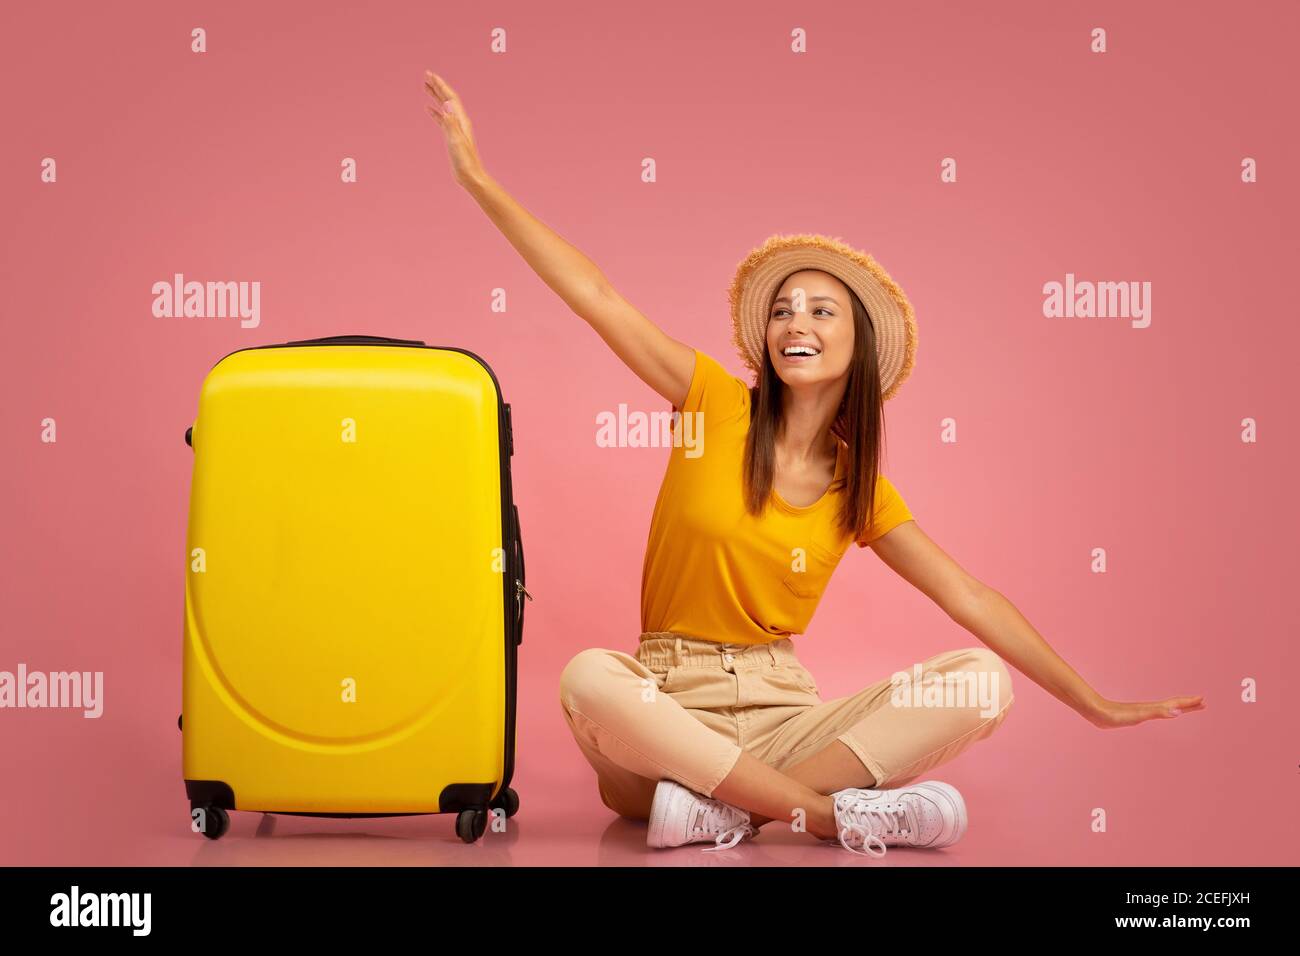 Girl sitting next to suitcase, imitating airplane Stock Photo